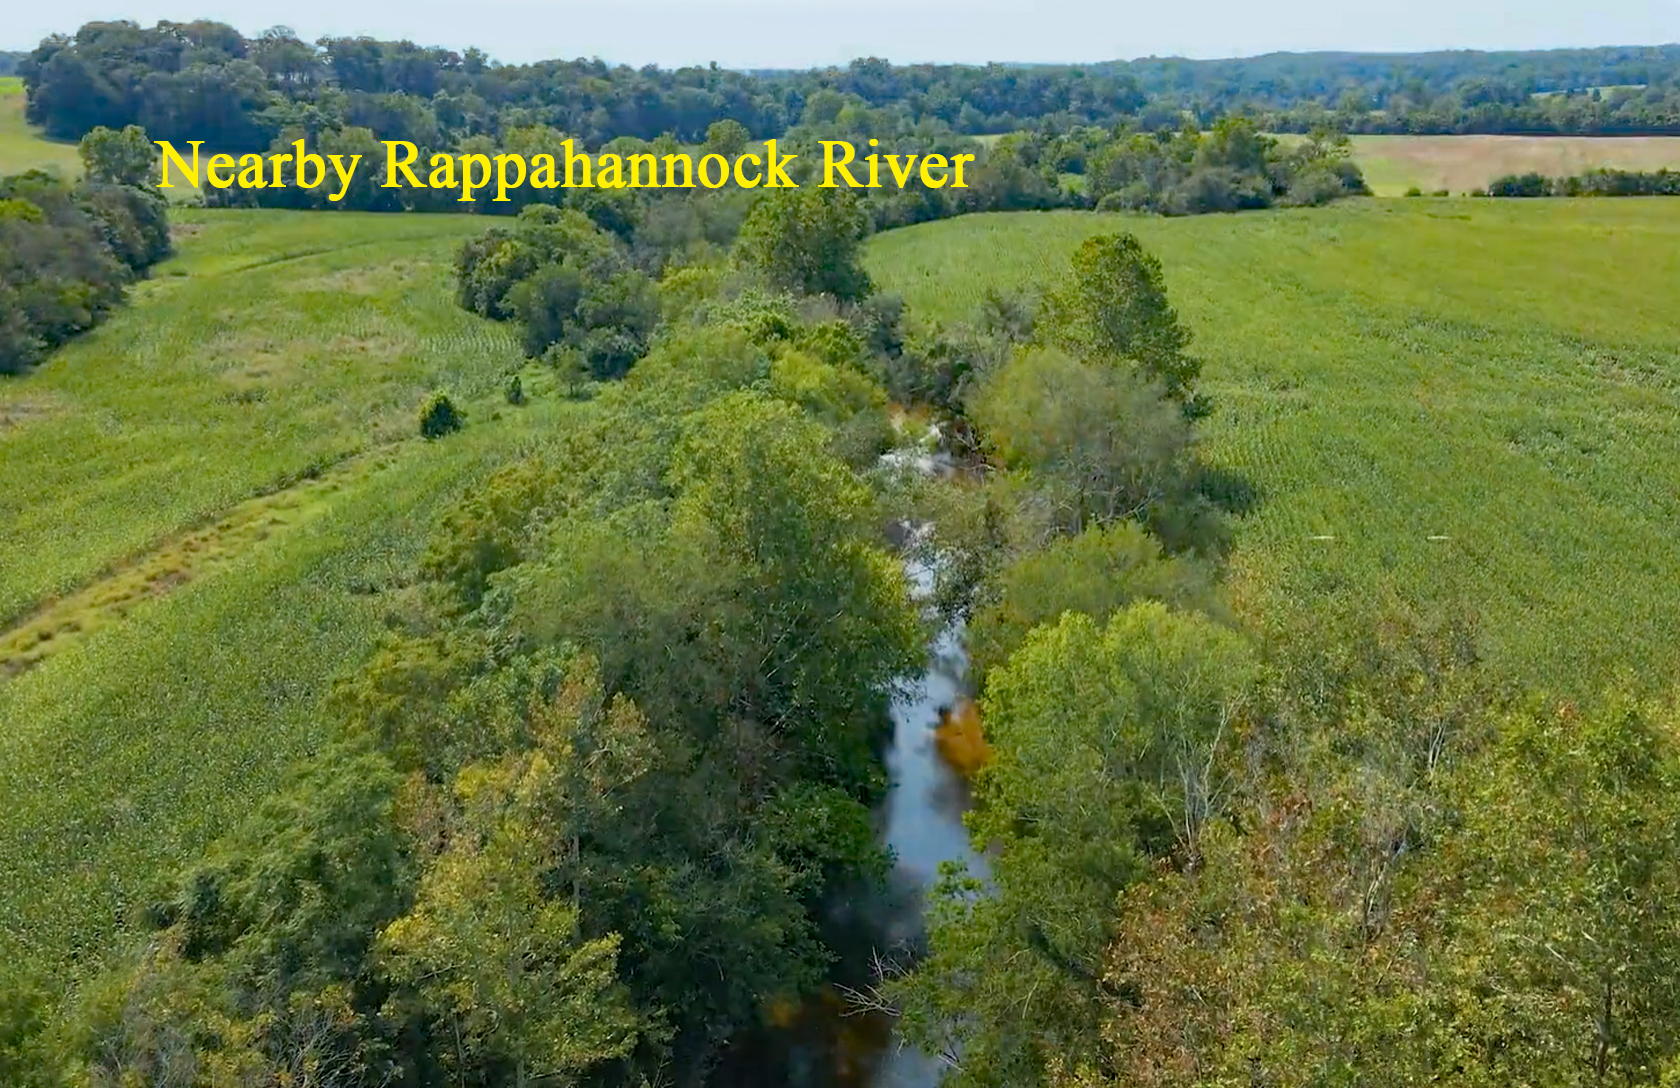 Rappahannock River 1/4 mile away